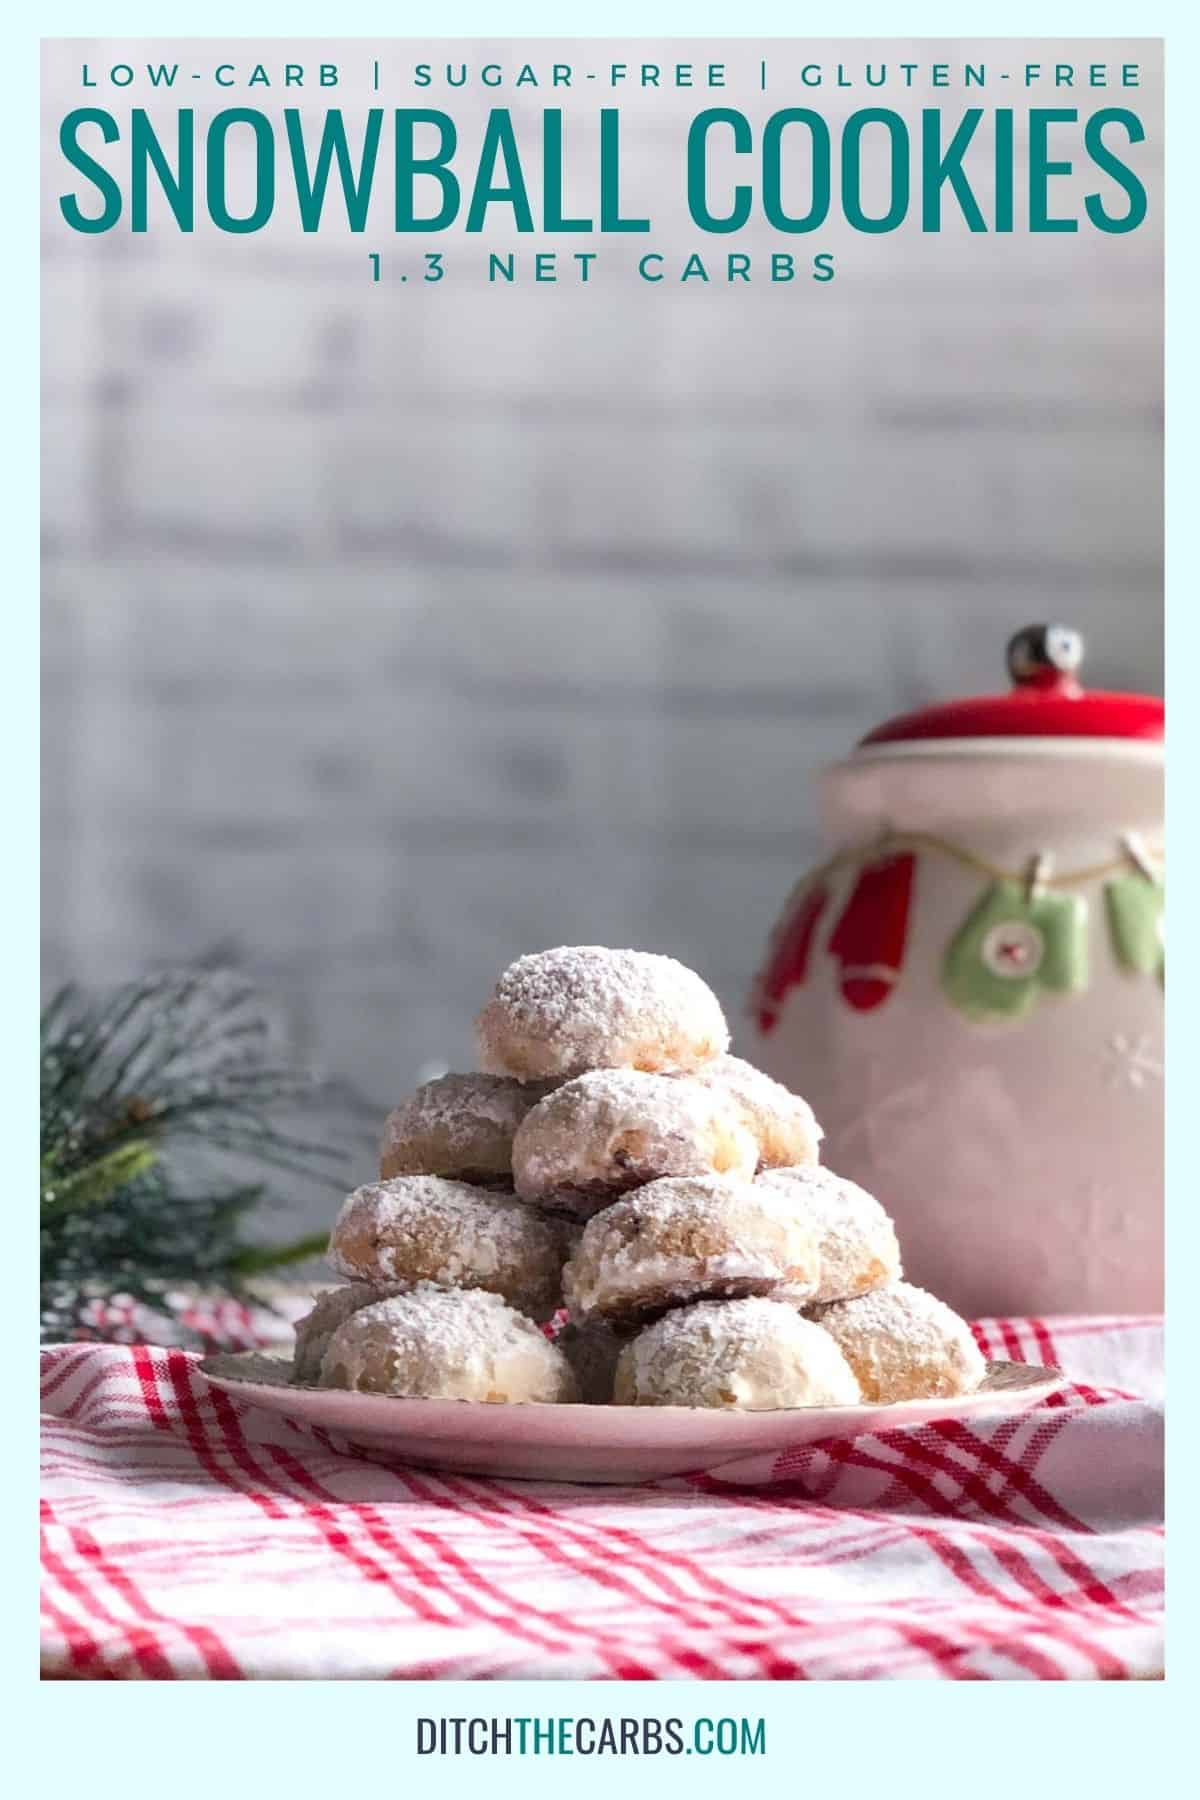 Pile of keto snowball cookies